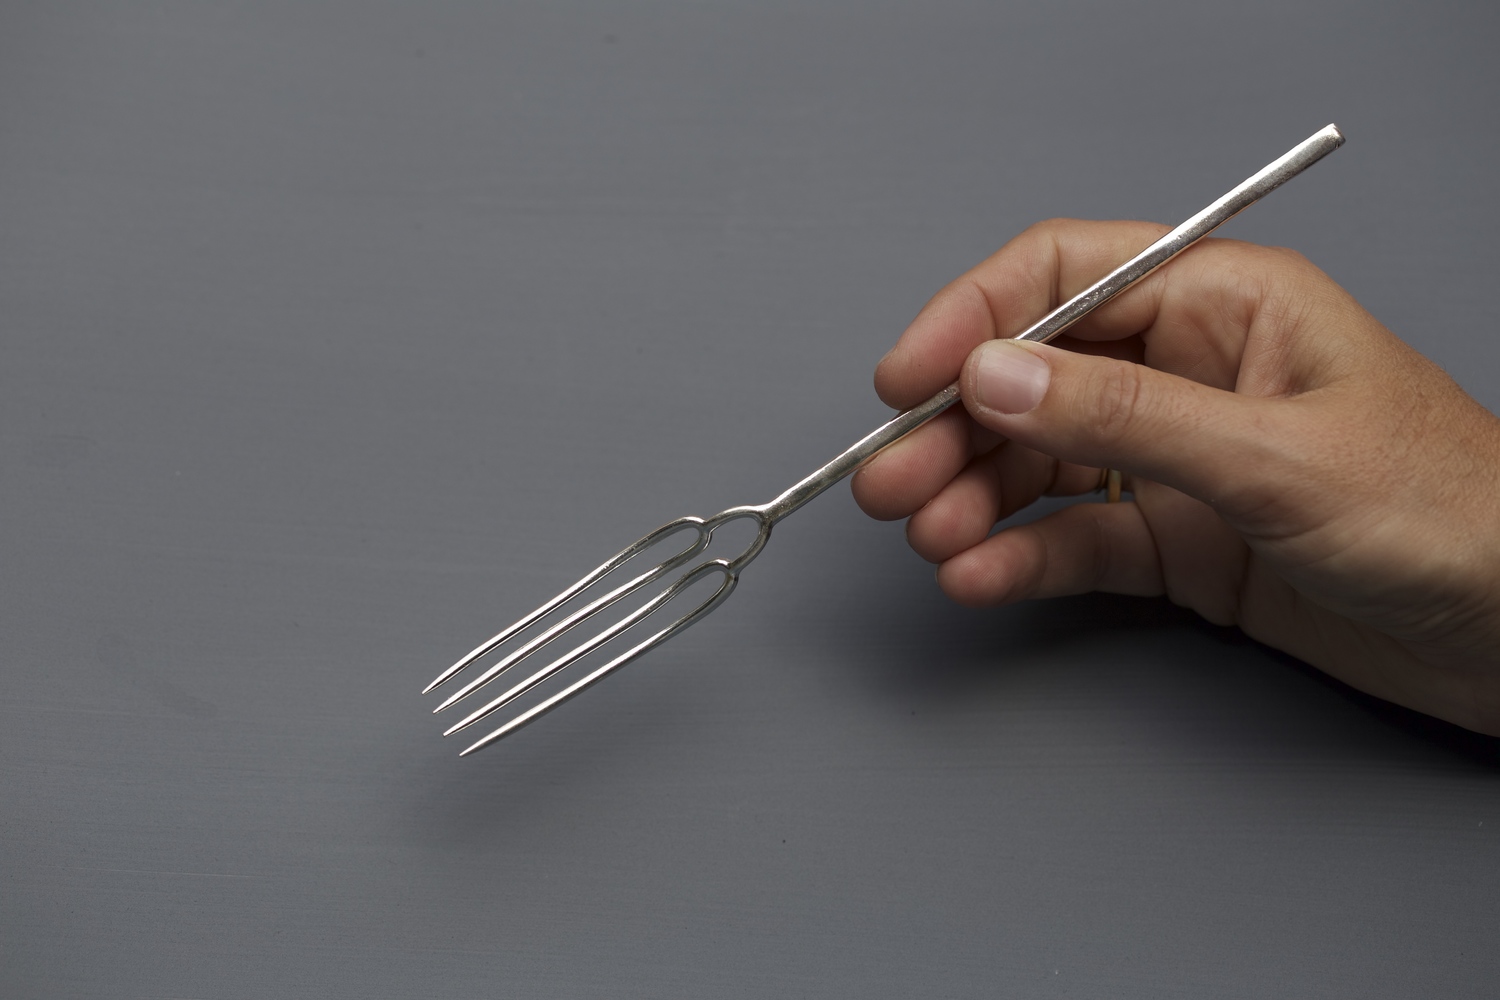 chef's tasting spoon, sterling — ann ladson